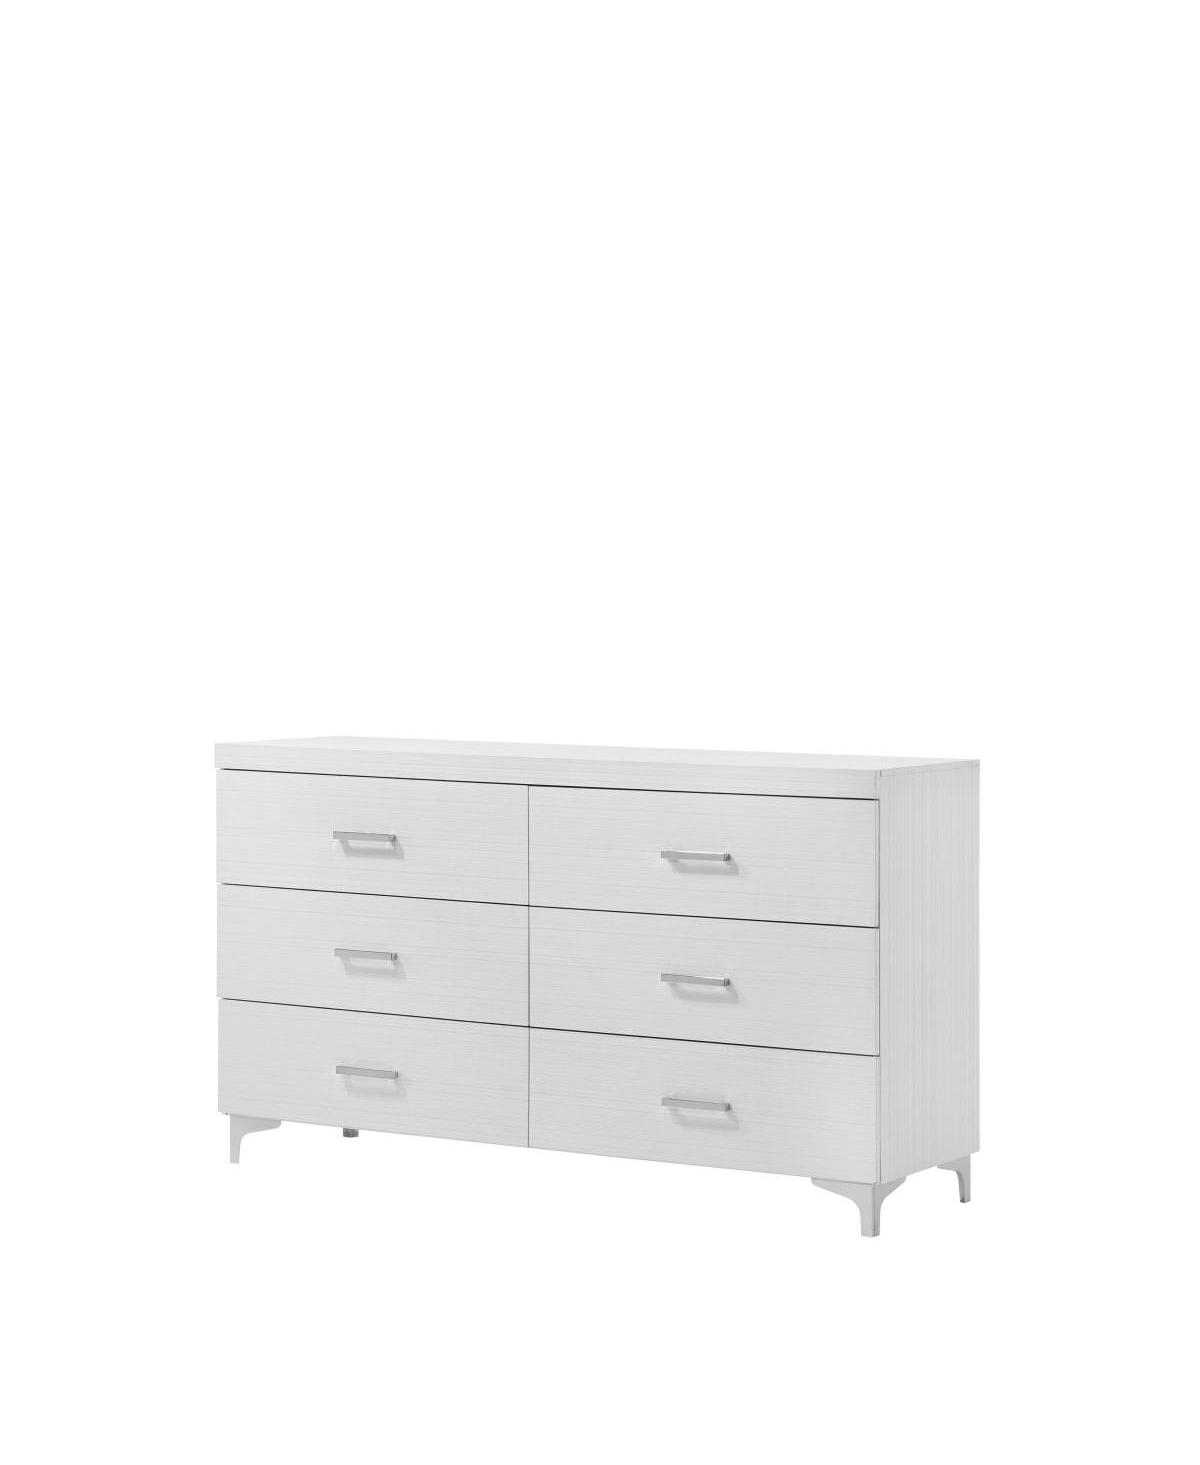 Casilda Dresser In White Finish - White